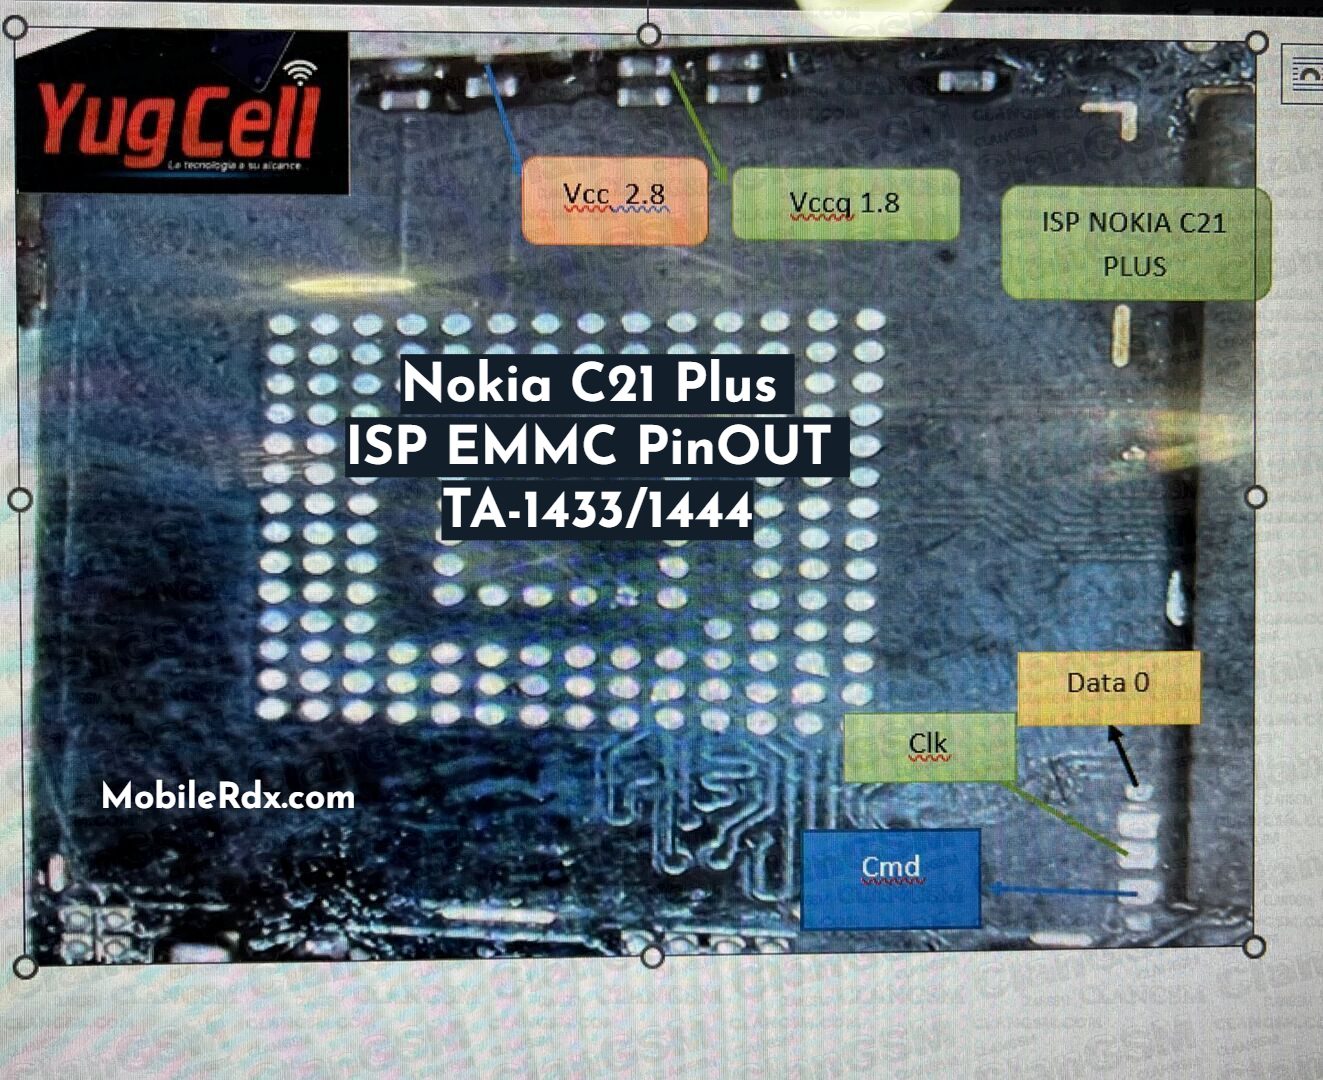 Nokia C21 Plus ISP EMMC PinOUT   Test Point